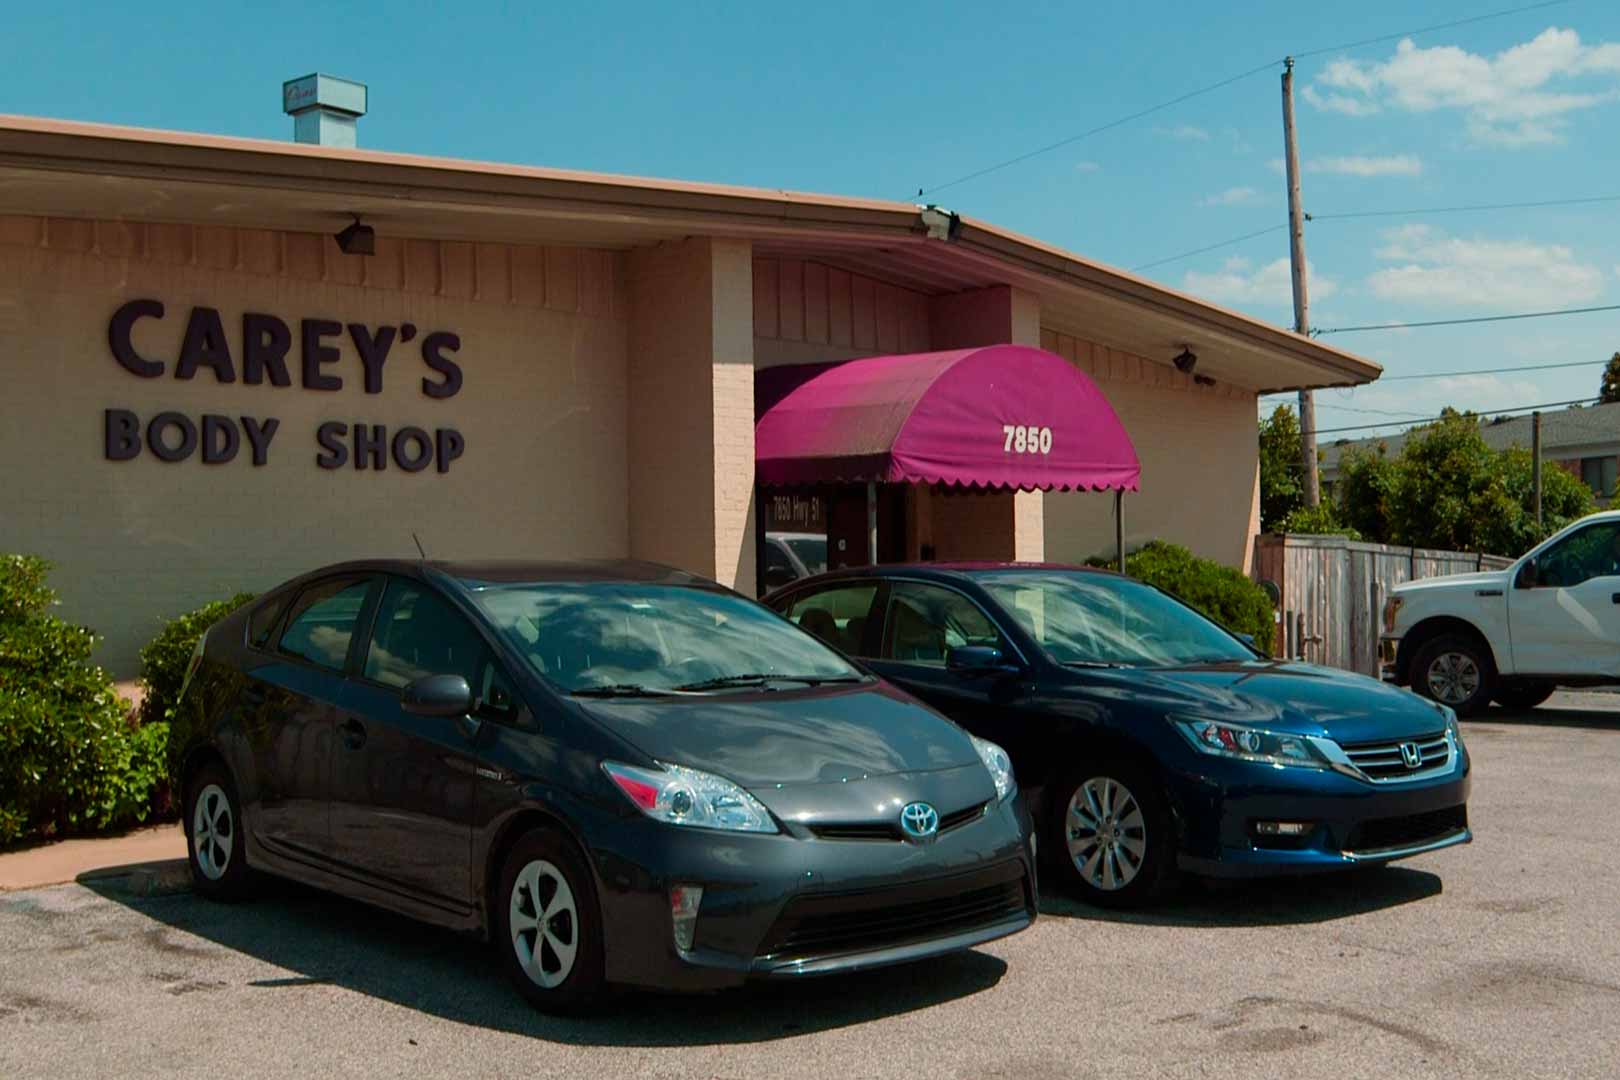 Carey's Body Shop in Millington, TN 